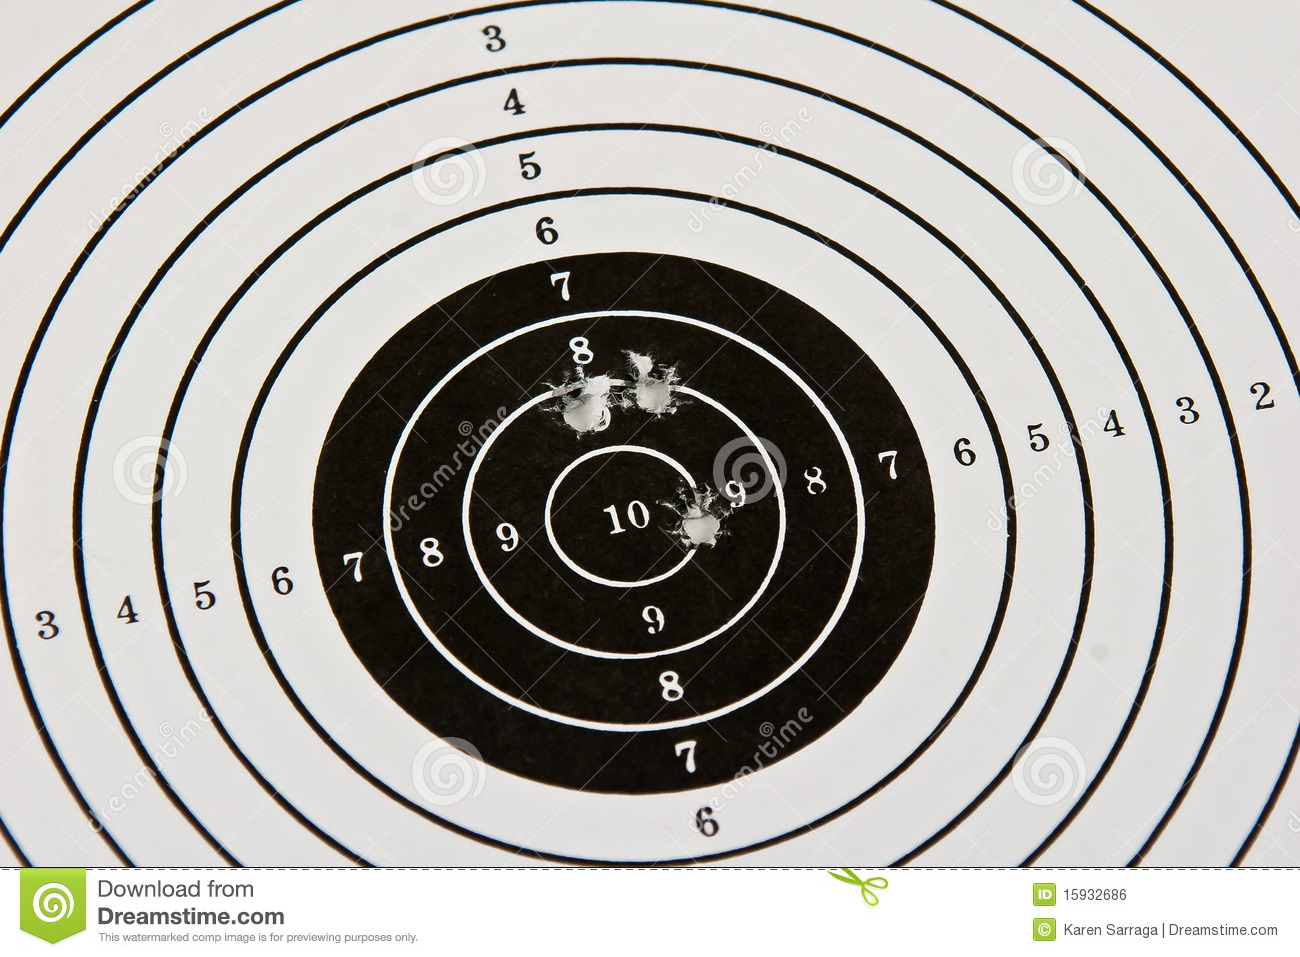 Bulls Eye Target With Bullet Holes Royalty Free Stock Image   Image